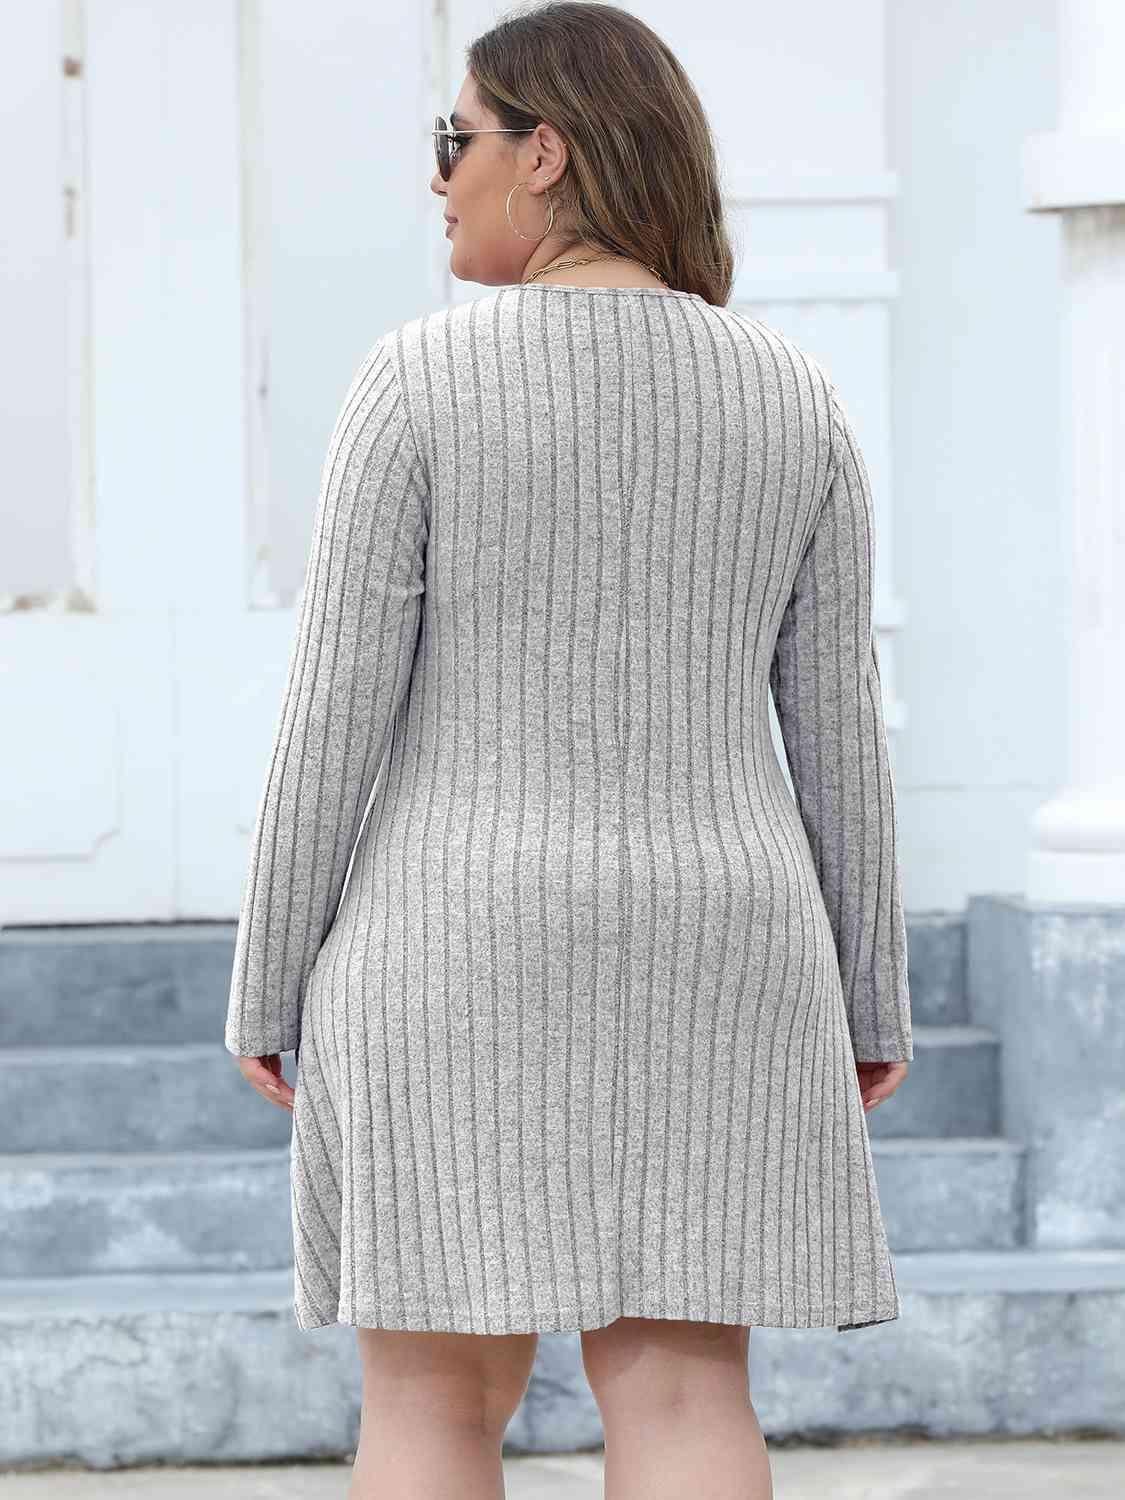 Diligently Ribbed Plus Size Long Sleeve Dress - MXSTUDIO.COM